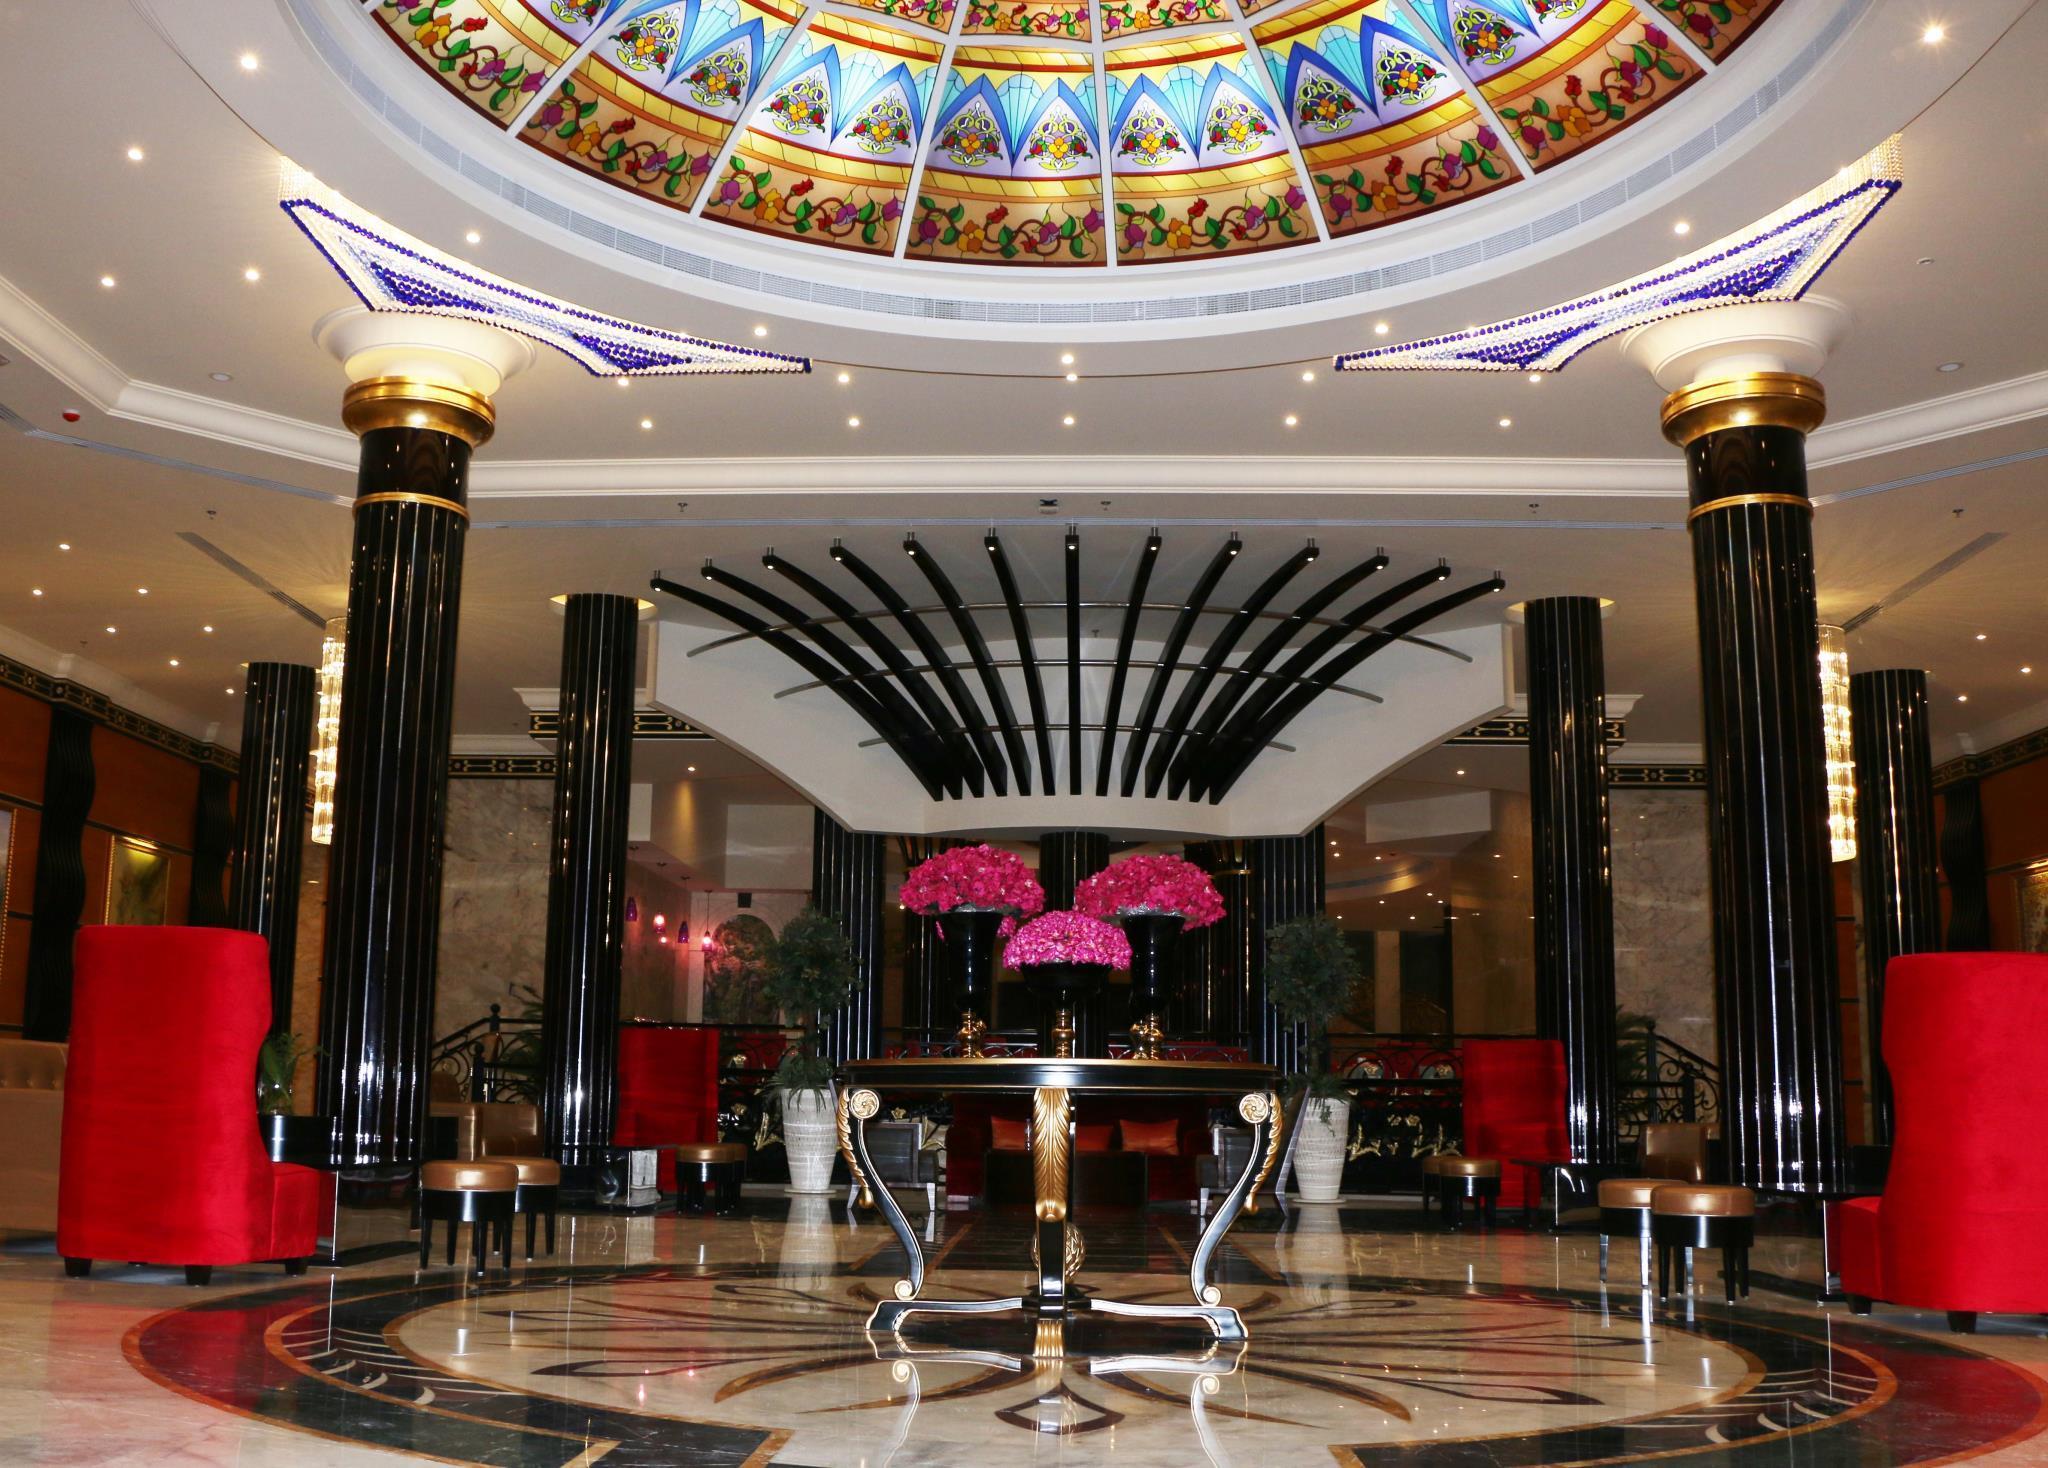 Red Castle Hotel Sharjah Exterior foto